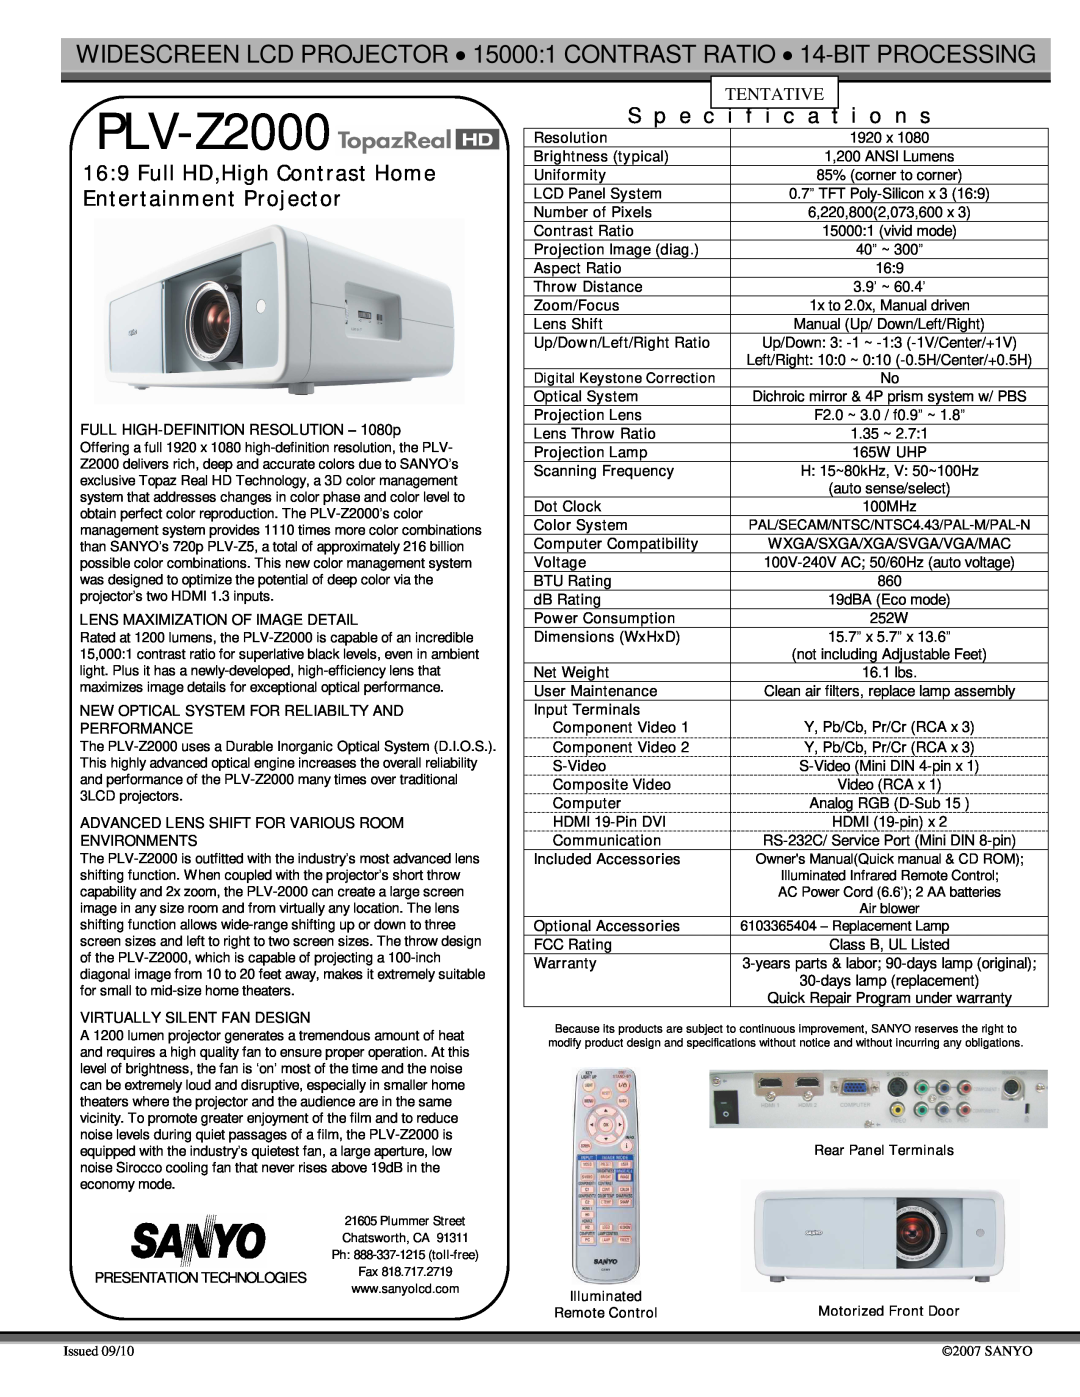 Sanyo PLV-Z2000 specifications S p e c i f i c a t i o n s, Tentative, PRESENTATION TECHNOLOGIES Fax 